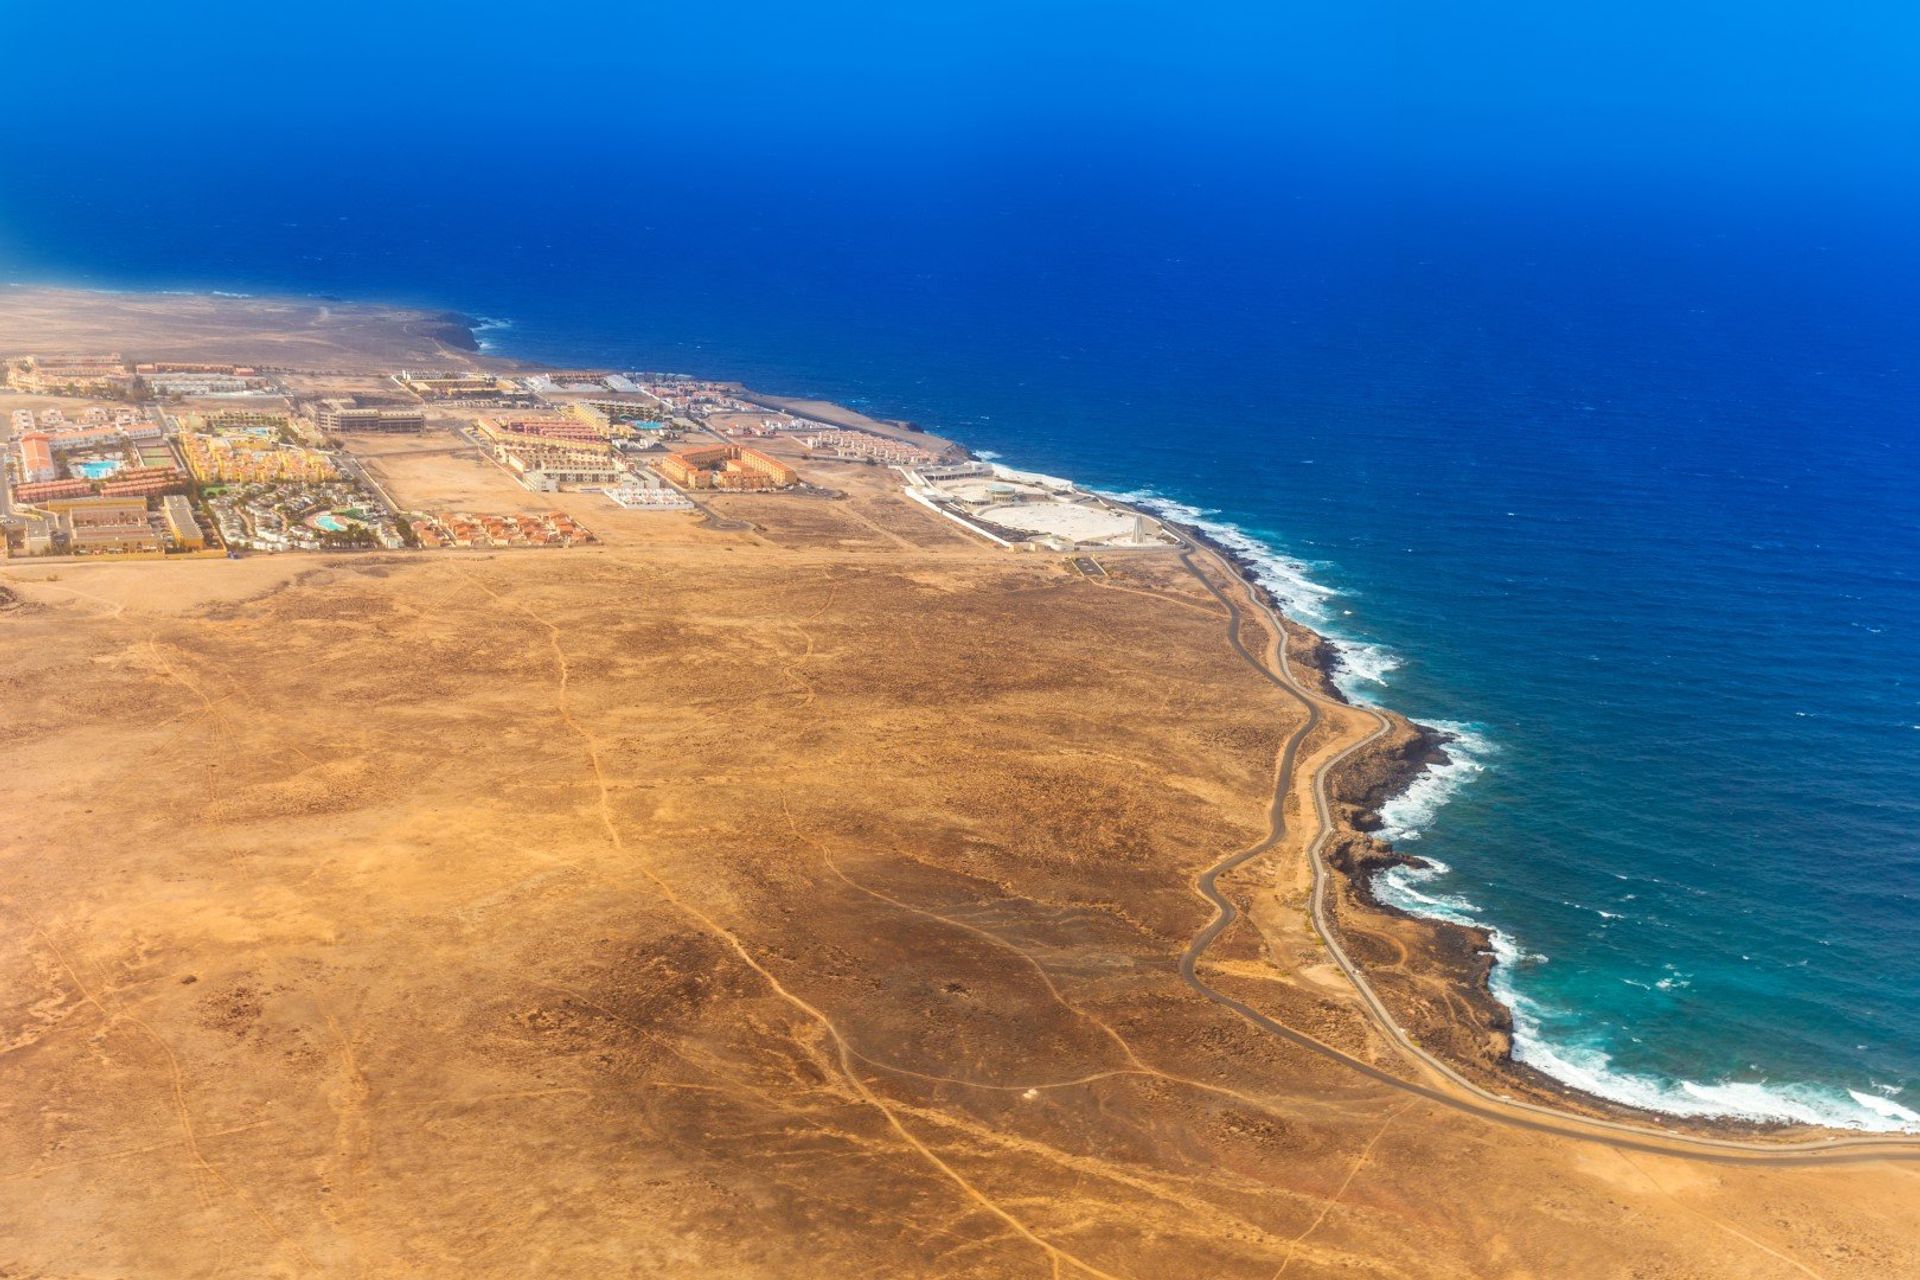 Aerial views of the family-friendly resort of Caleta de Fuste on the island's east coast